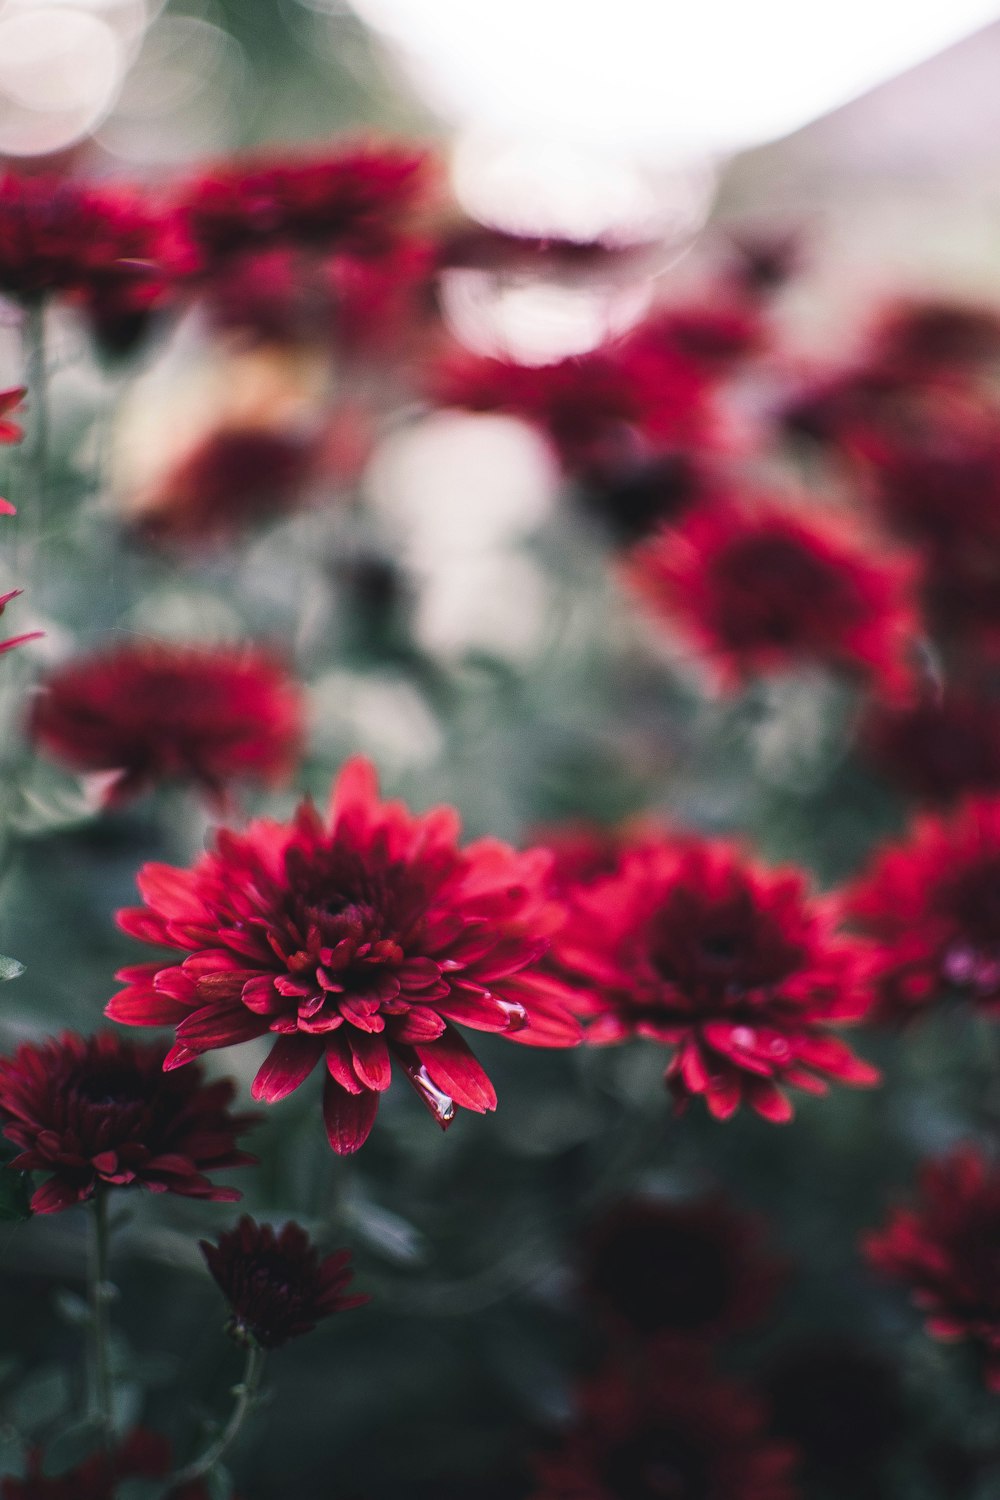 red petaled flowers